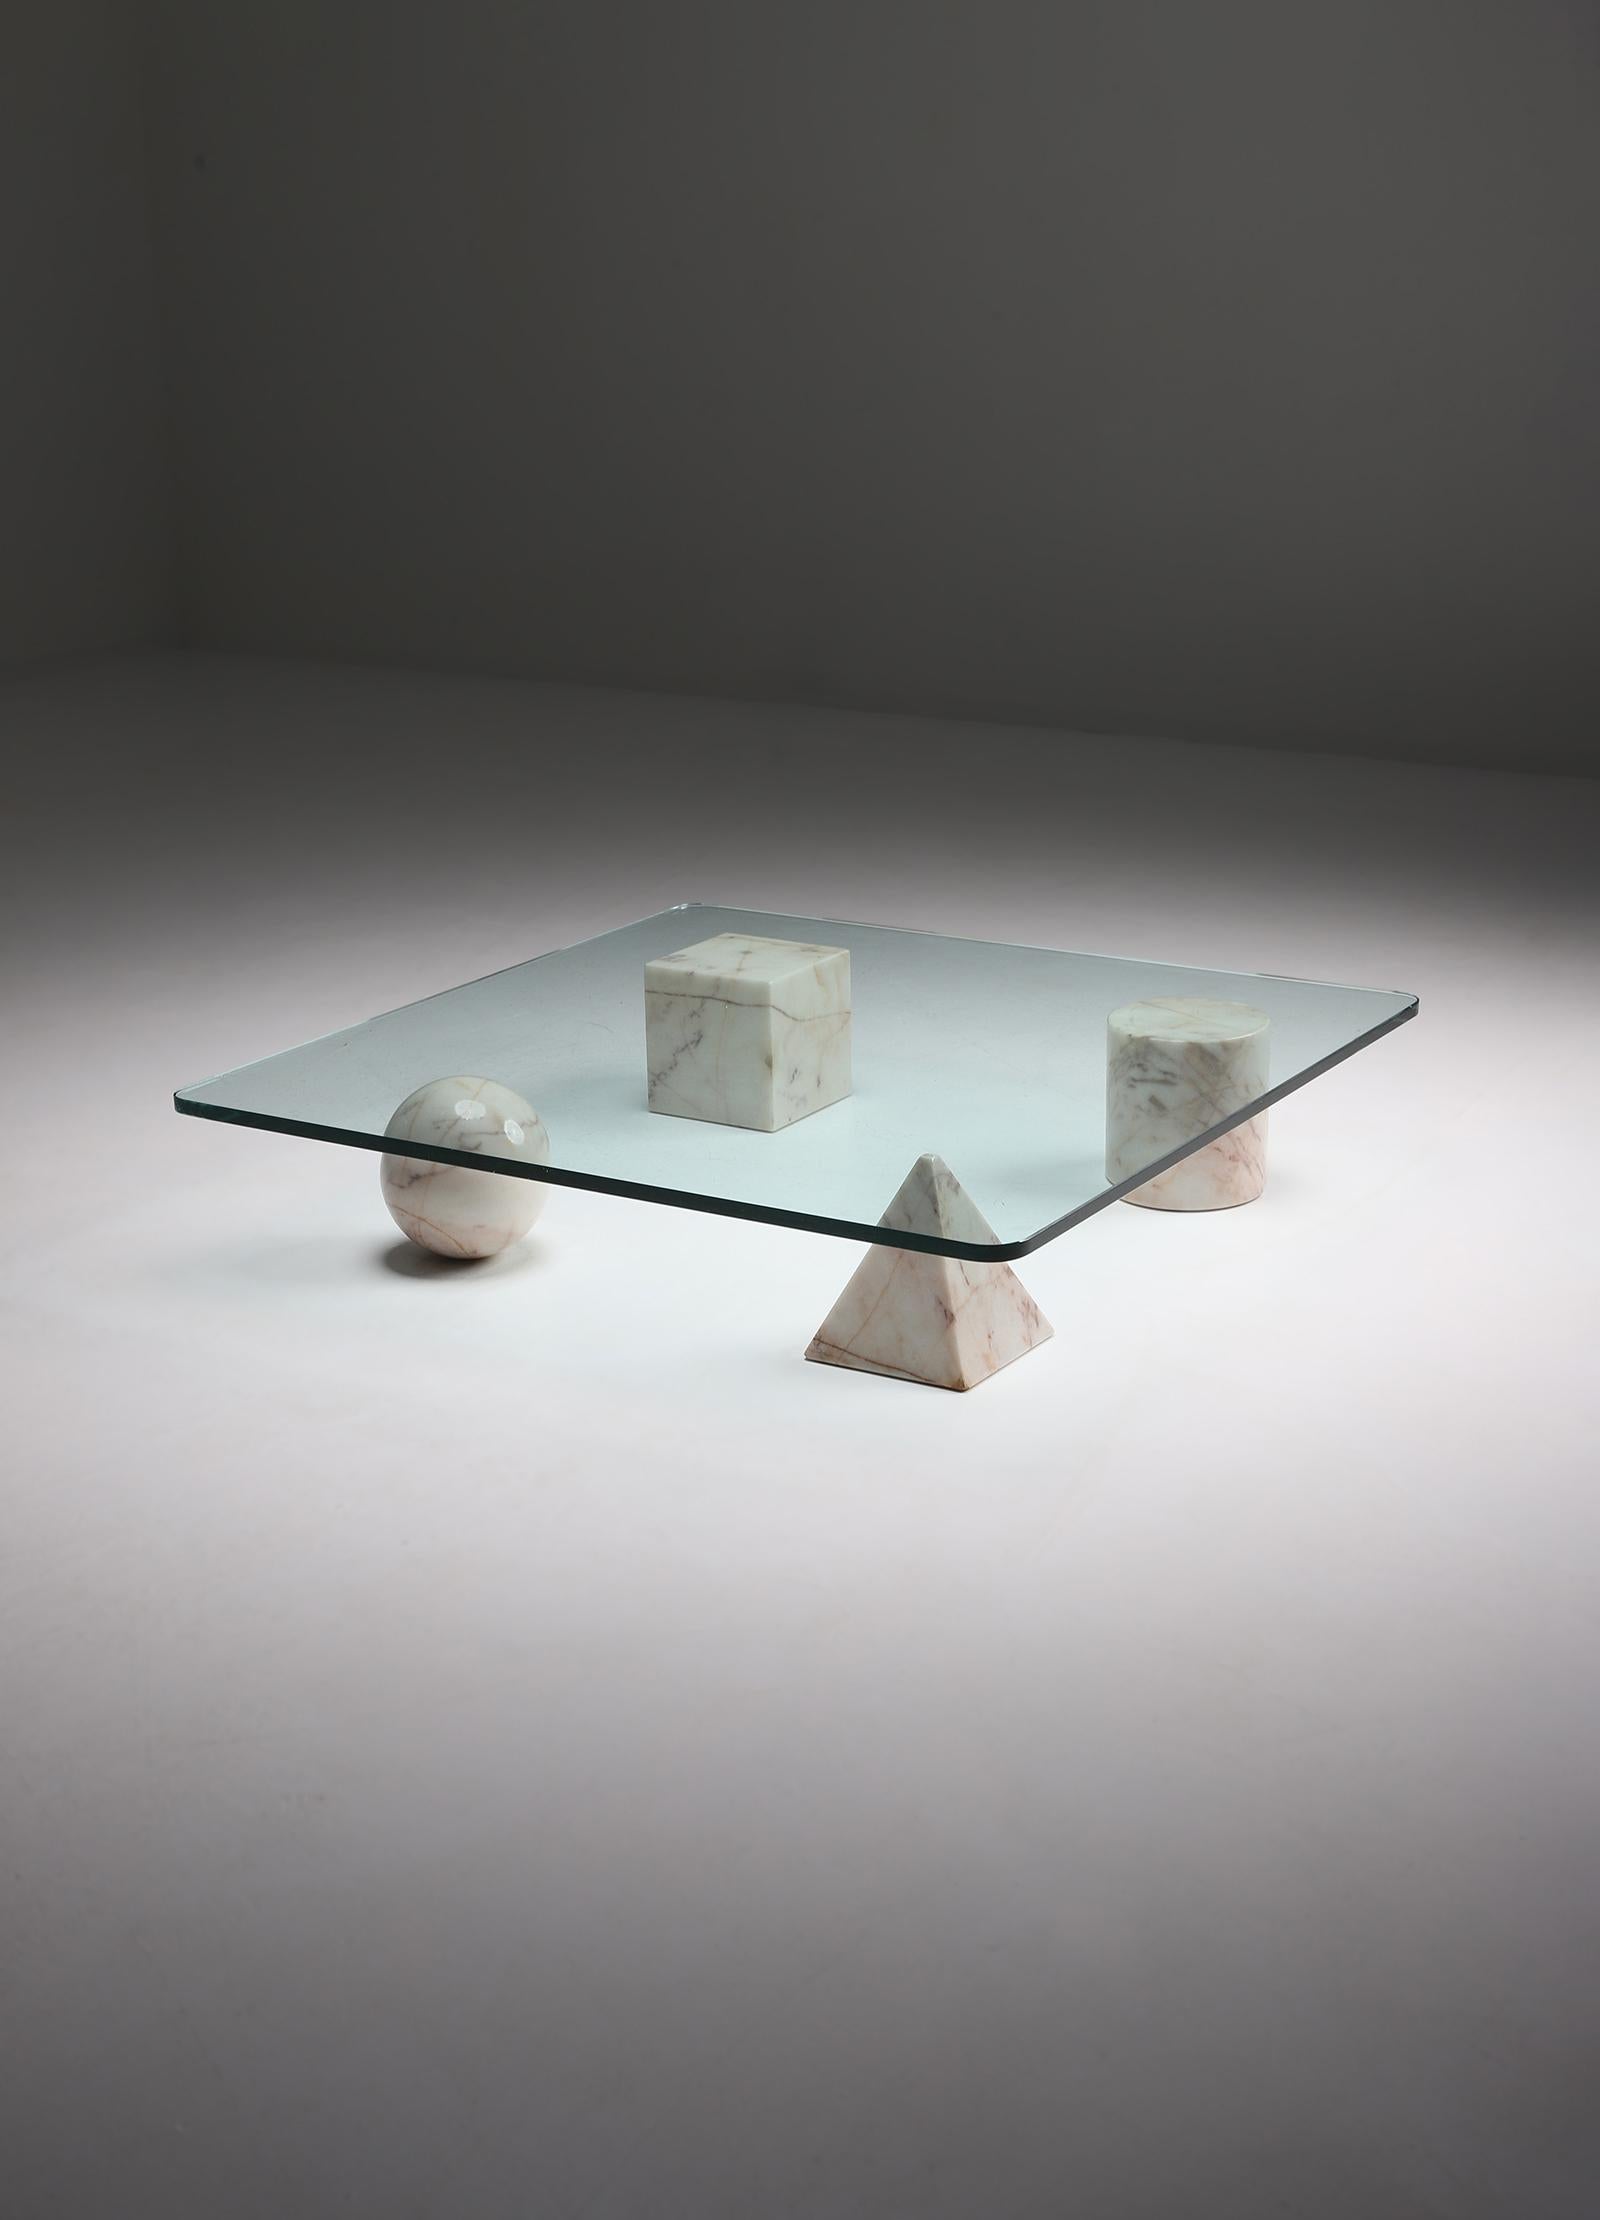 Glass Decorative Coffee Table by Lella and Massimo Vignelli, Designed in the 1970s